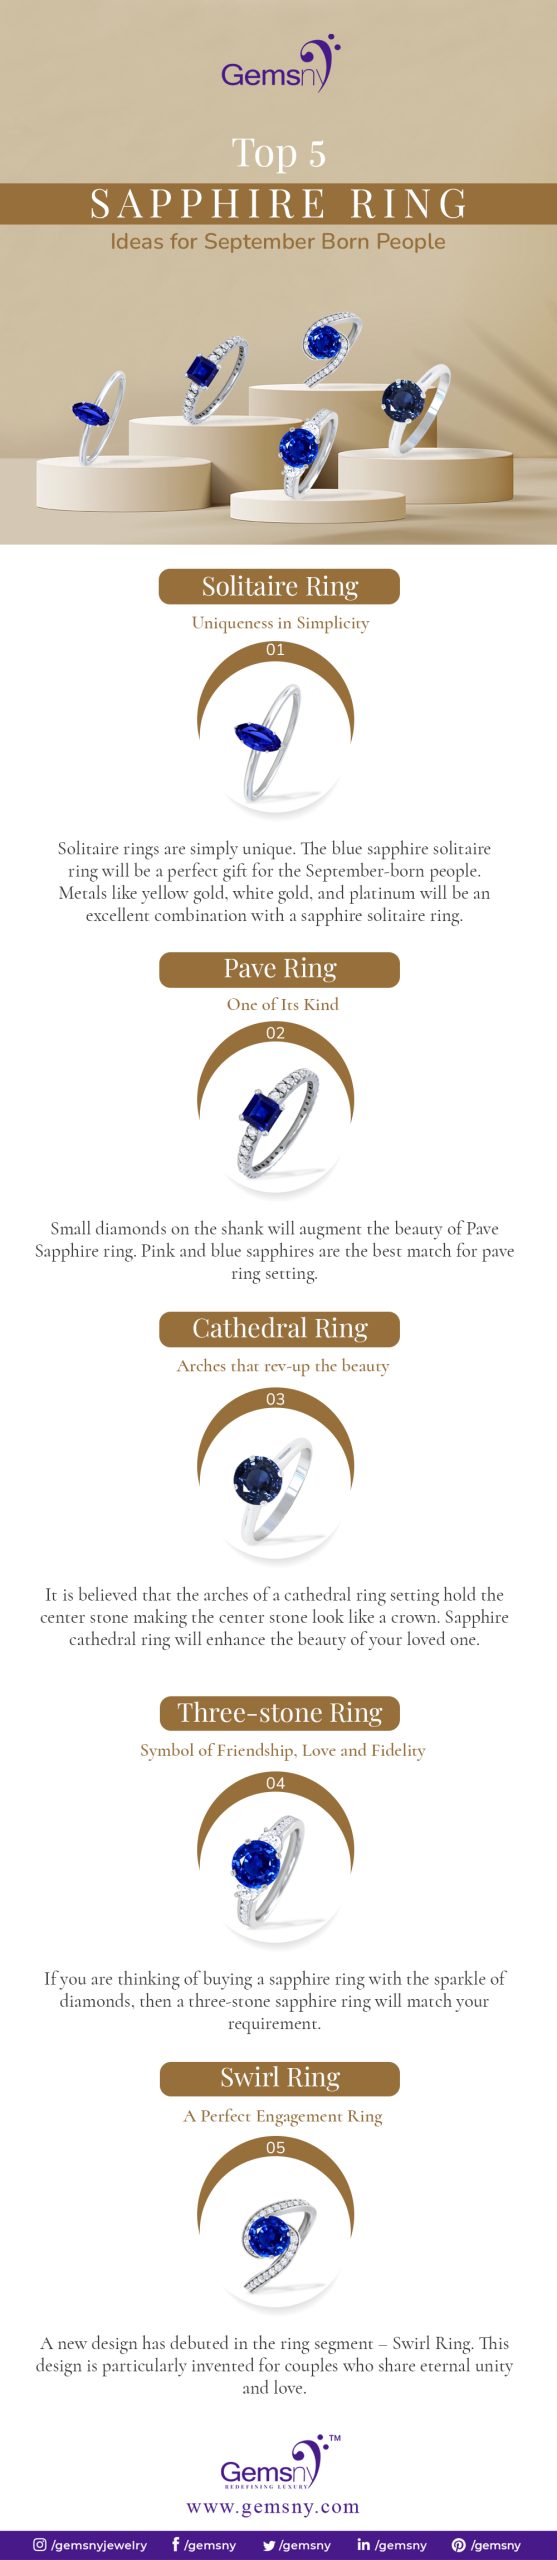 Top 5 Sapphire Ring Ideas for September Born